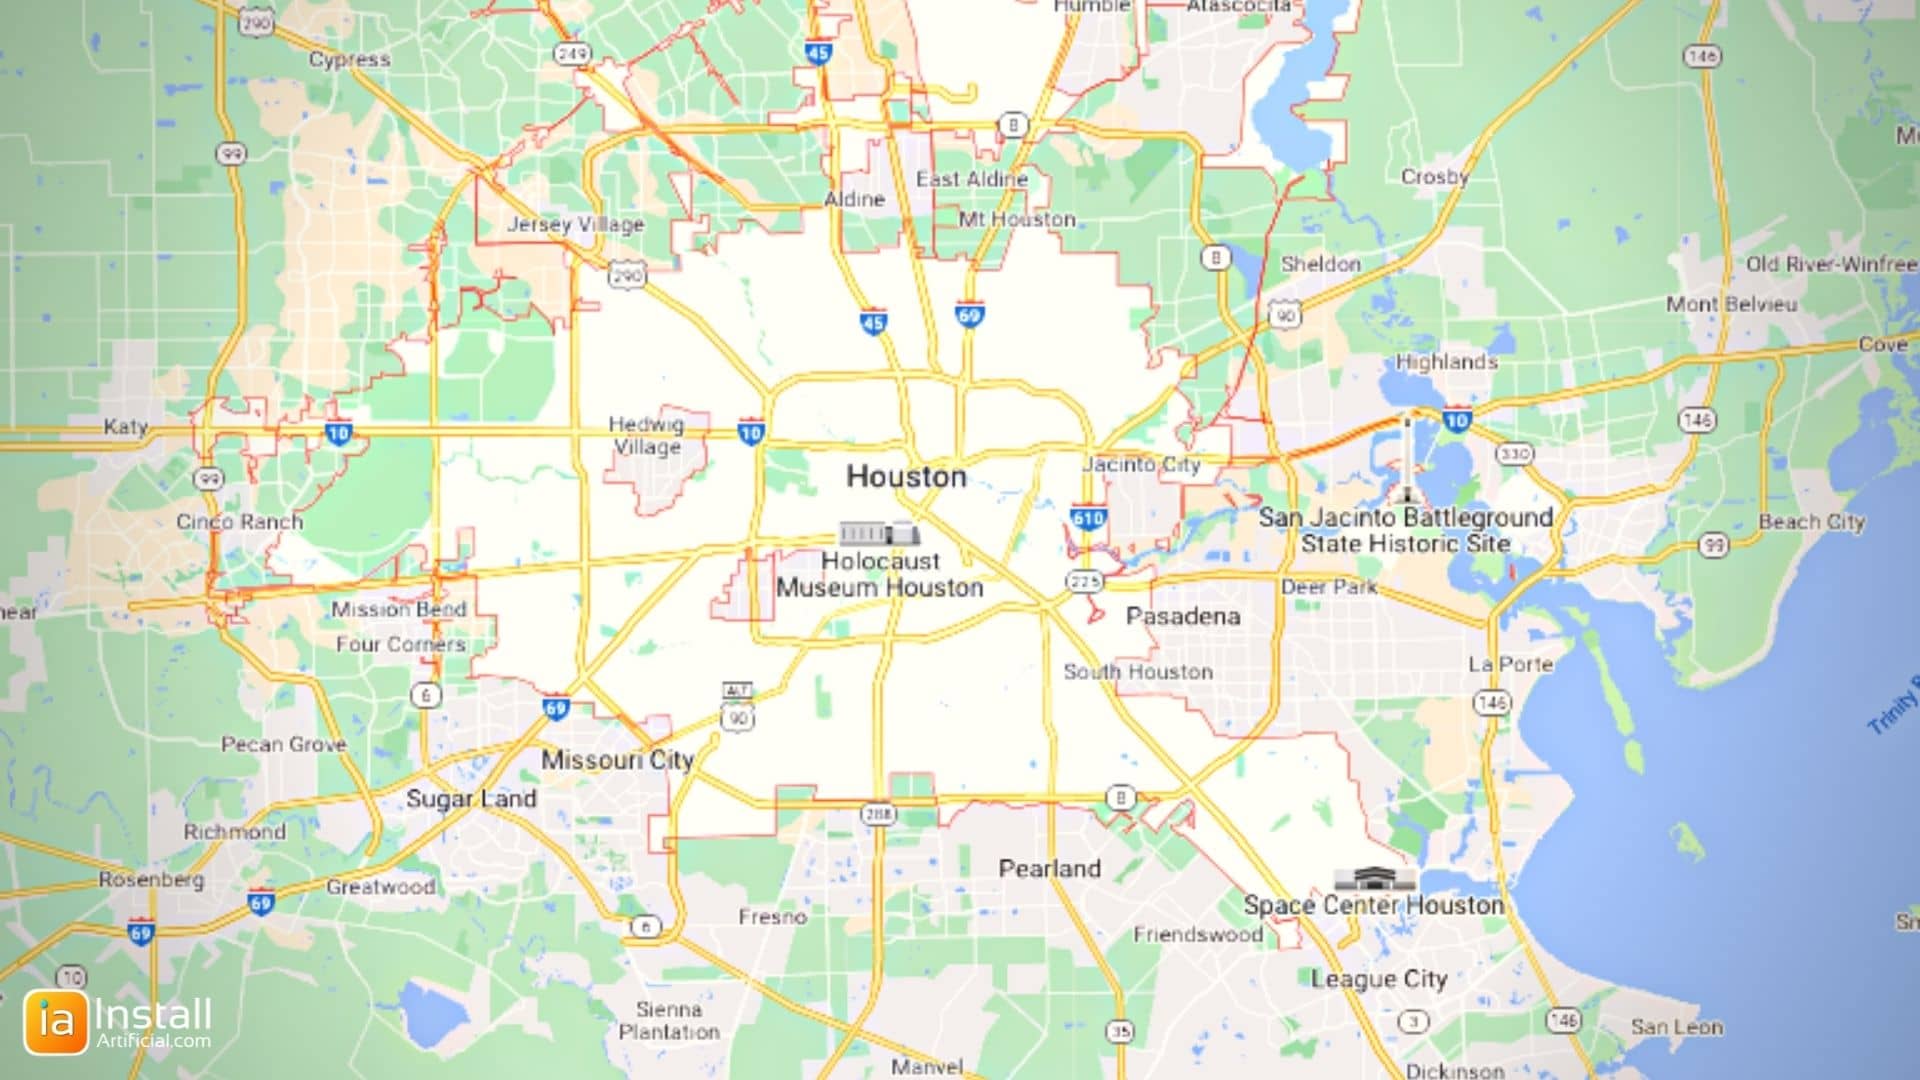 InstallArtificial Location Map - Houston Texas